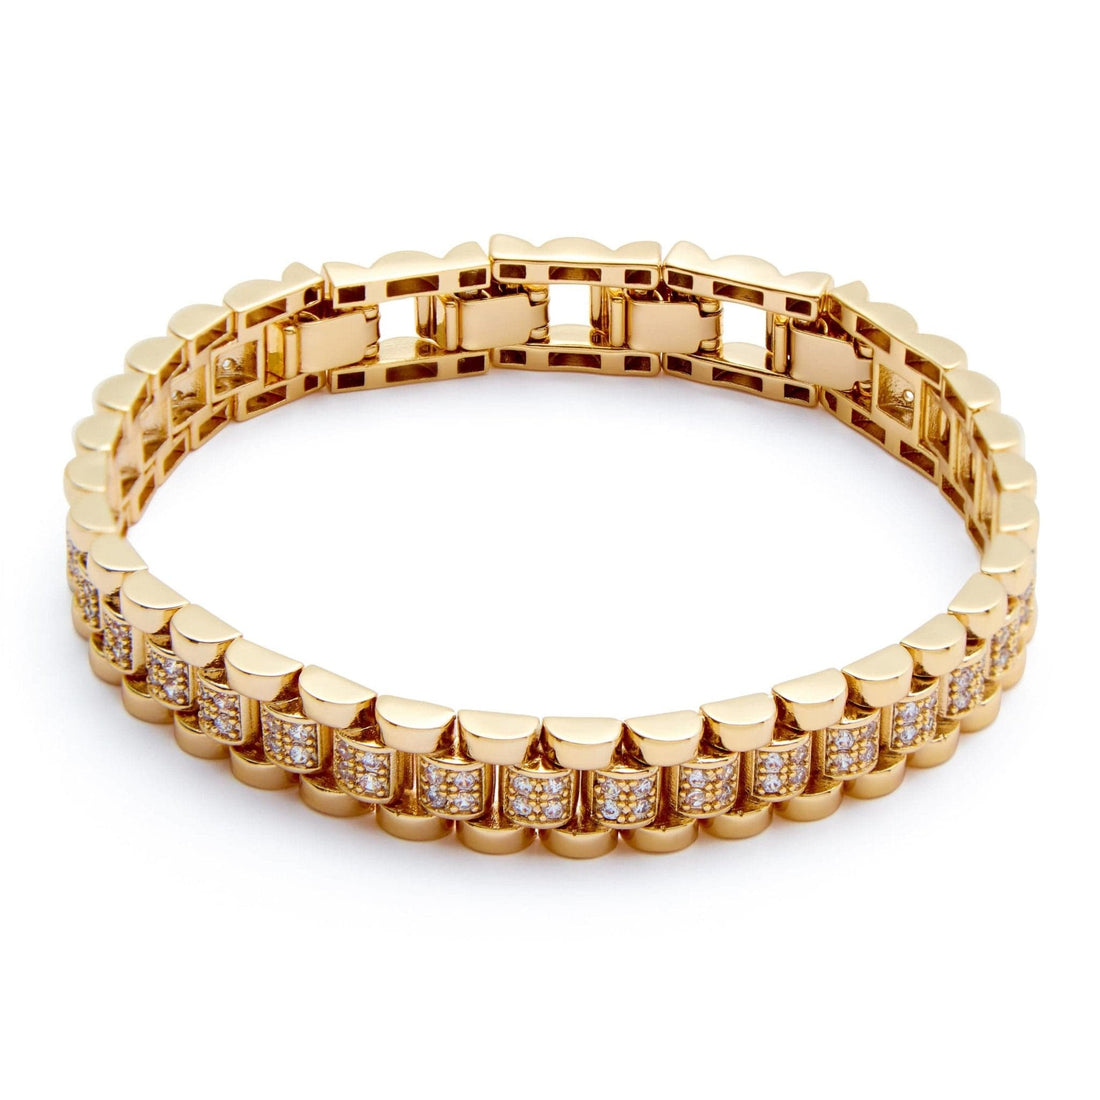 All Wear Jewellery Bracelets 6.5" - 8" Adjustable / 18k Gold ROLEX LINK BRACELET 10MM